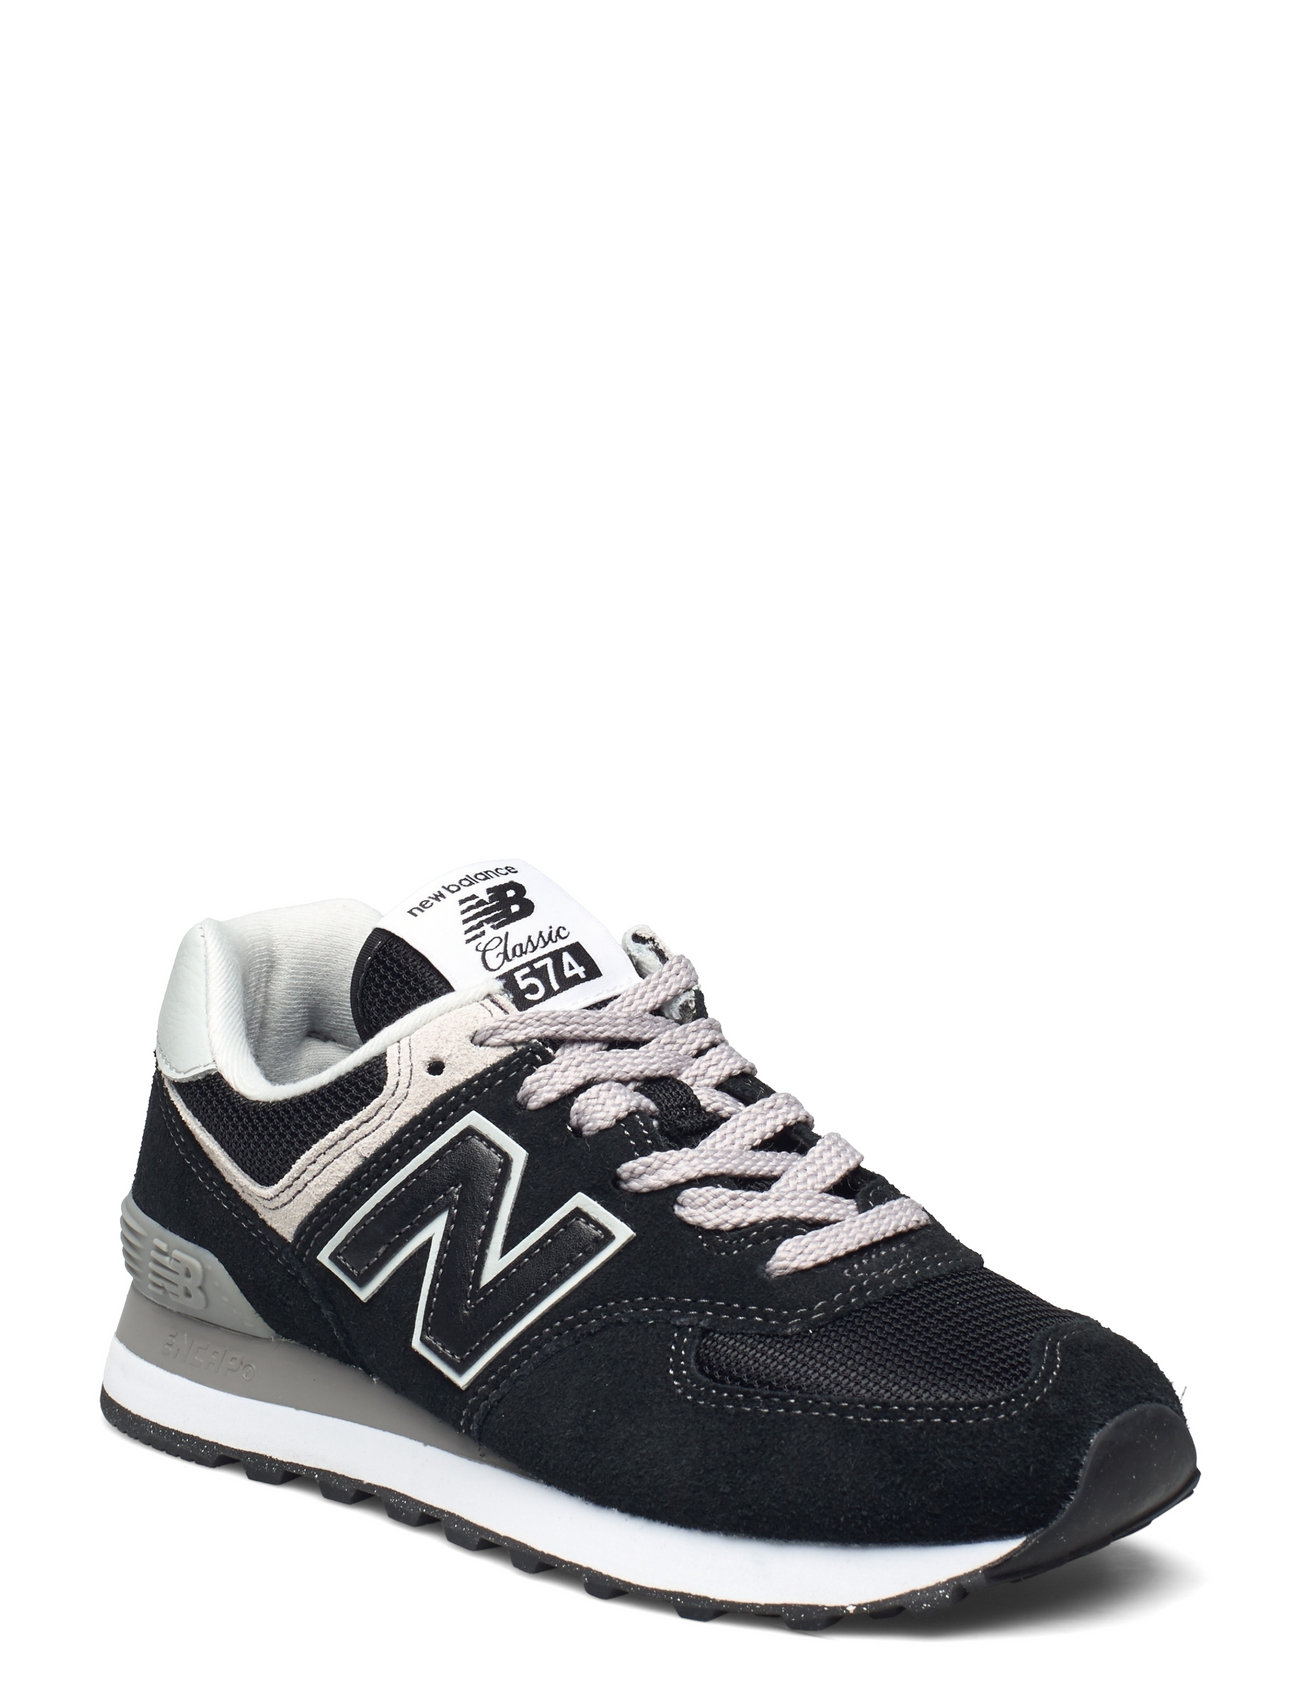 "New Balance" Balance 574 Low-top Sneakers Black New